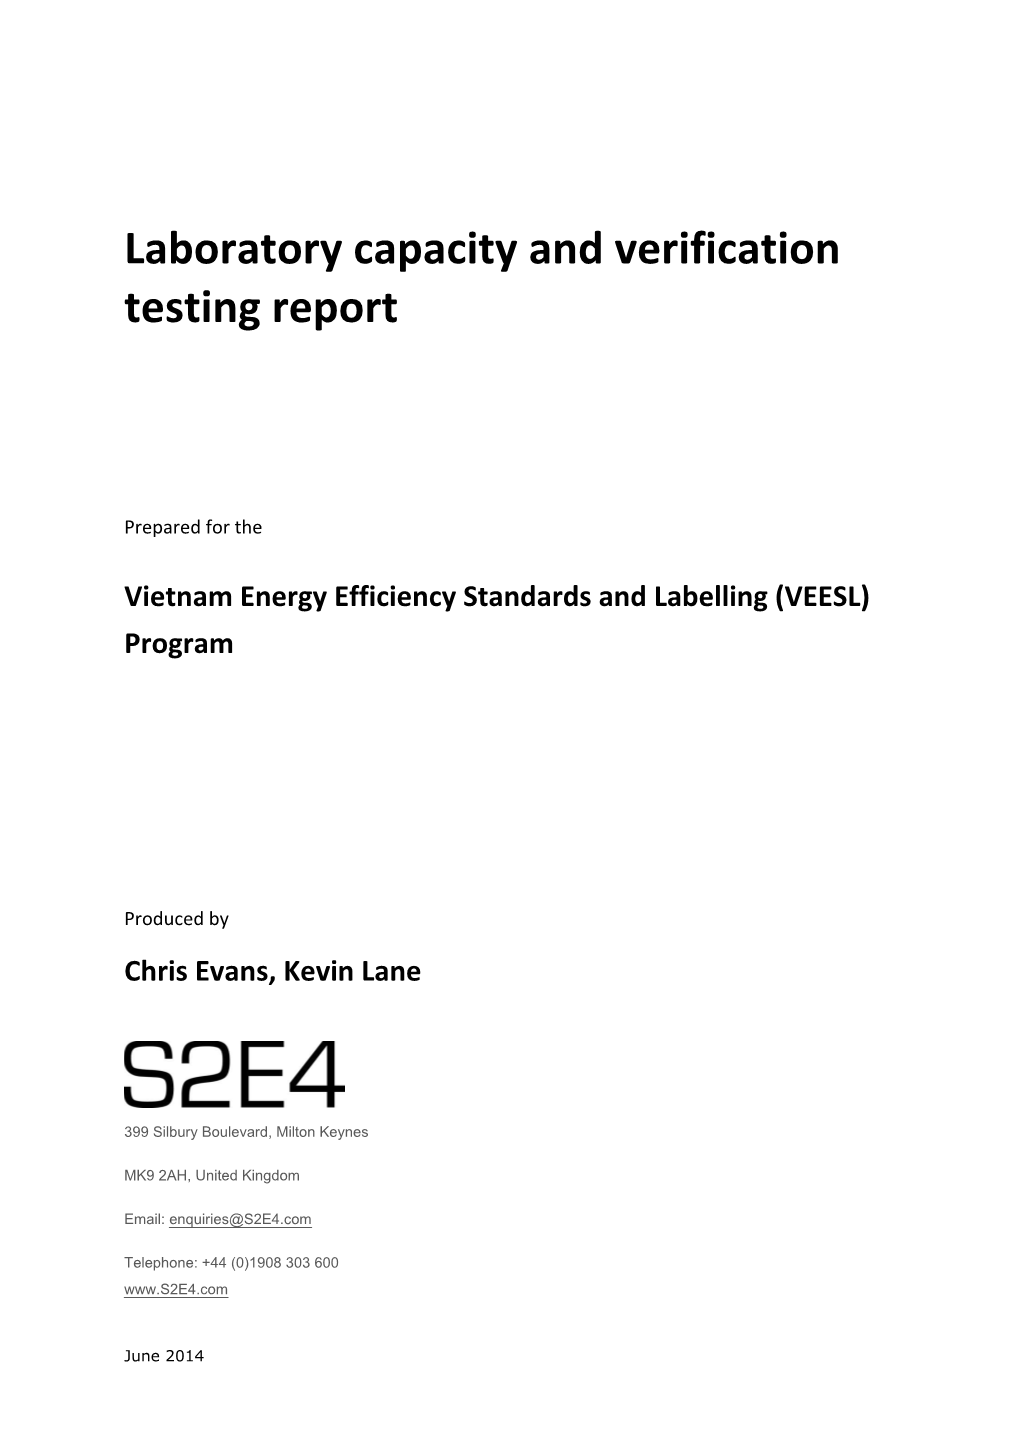 Laboratory Capacity and Verification Testing Report